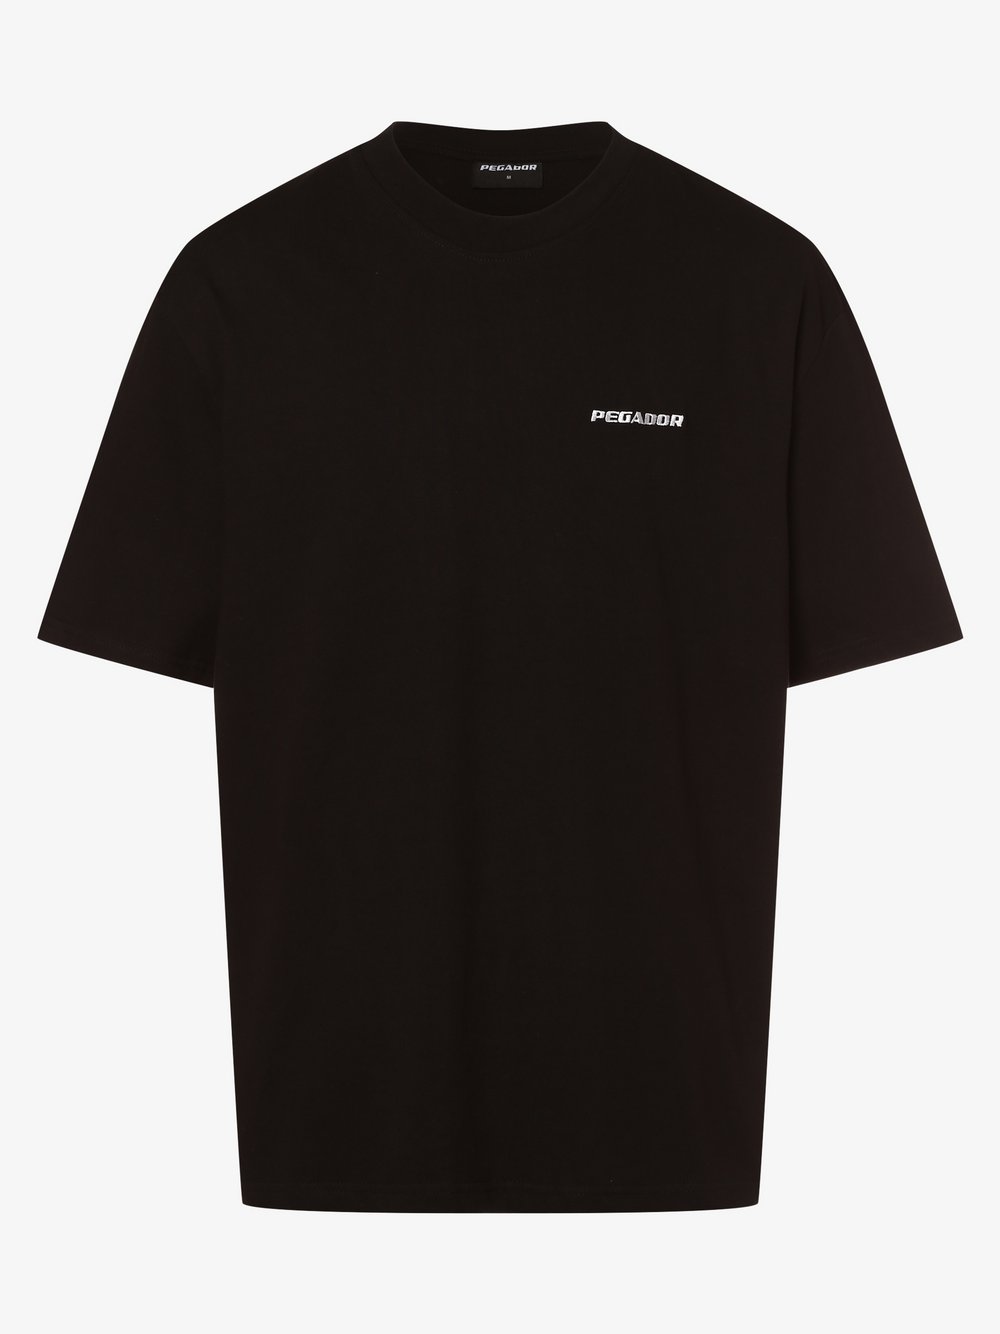 PEGADOR - T-shirt męski, czarny